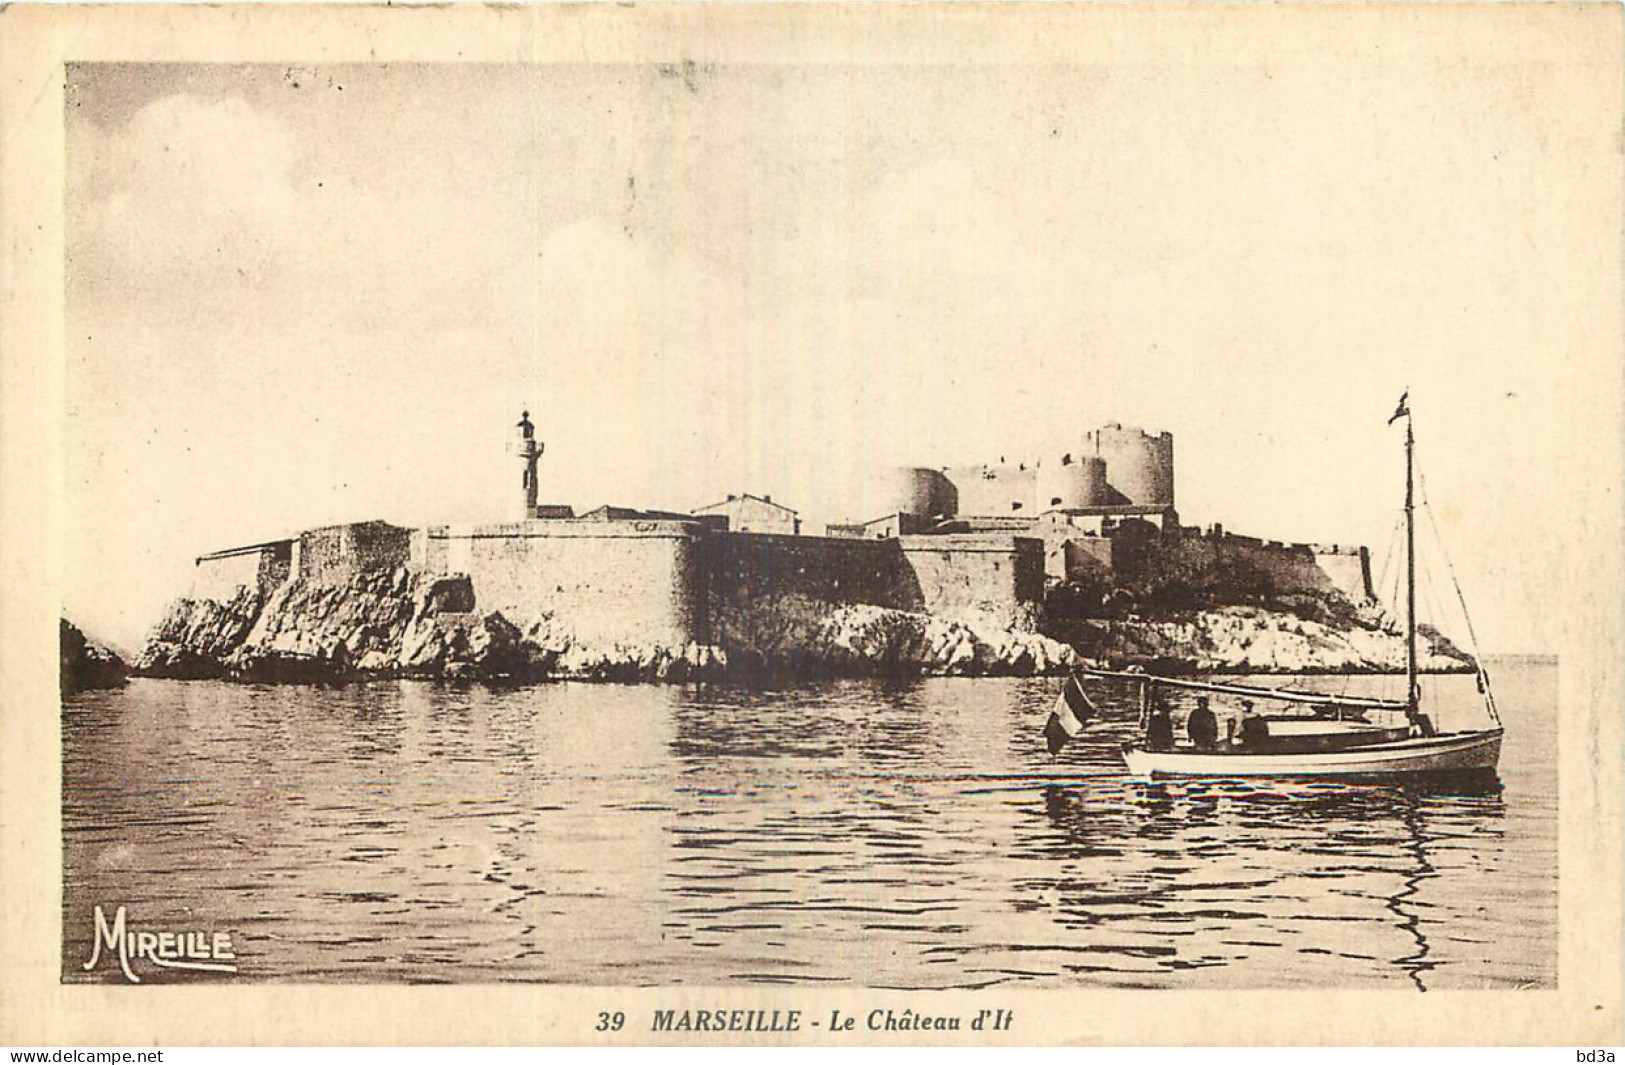 13 - MARSEILLE - CHATEAU D'IF - Castillo De If, Archipiélago De Frioul, Islas...